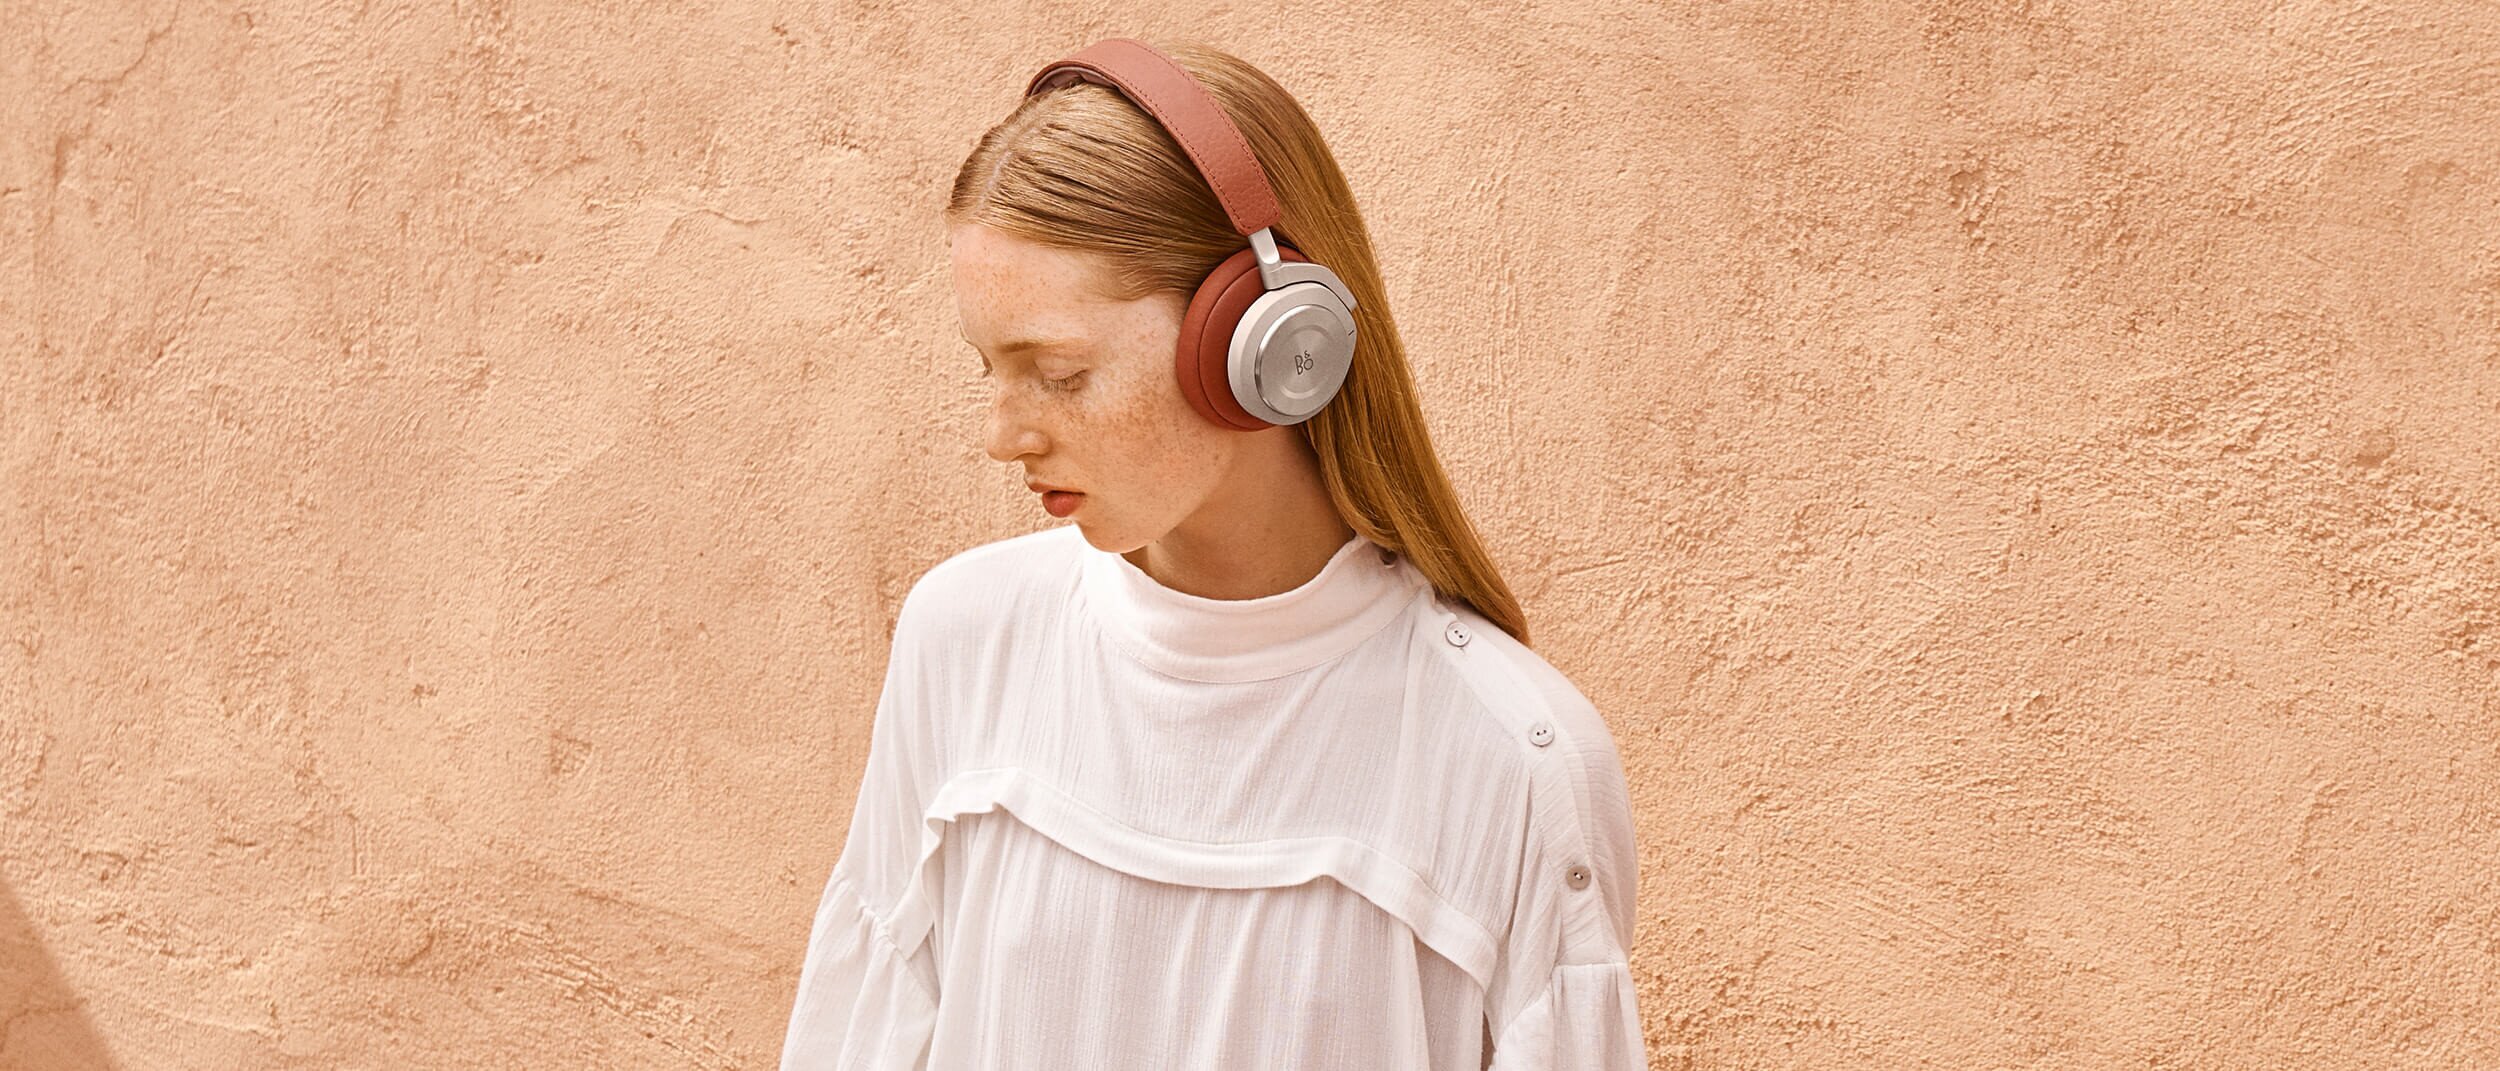 Bang Olufsen Beoplay H9i Over-Ear Wireless Headphones - Terracotta online Worldwide - Tejar.com